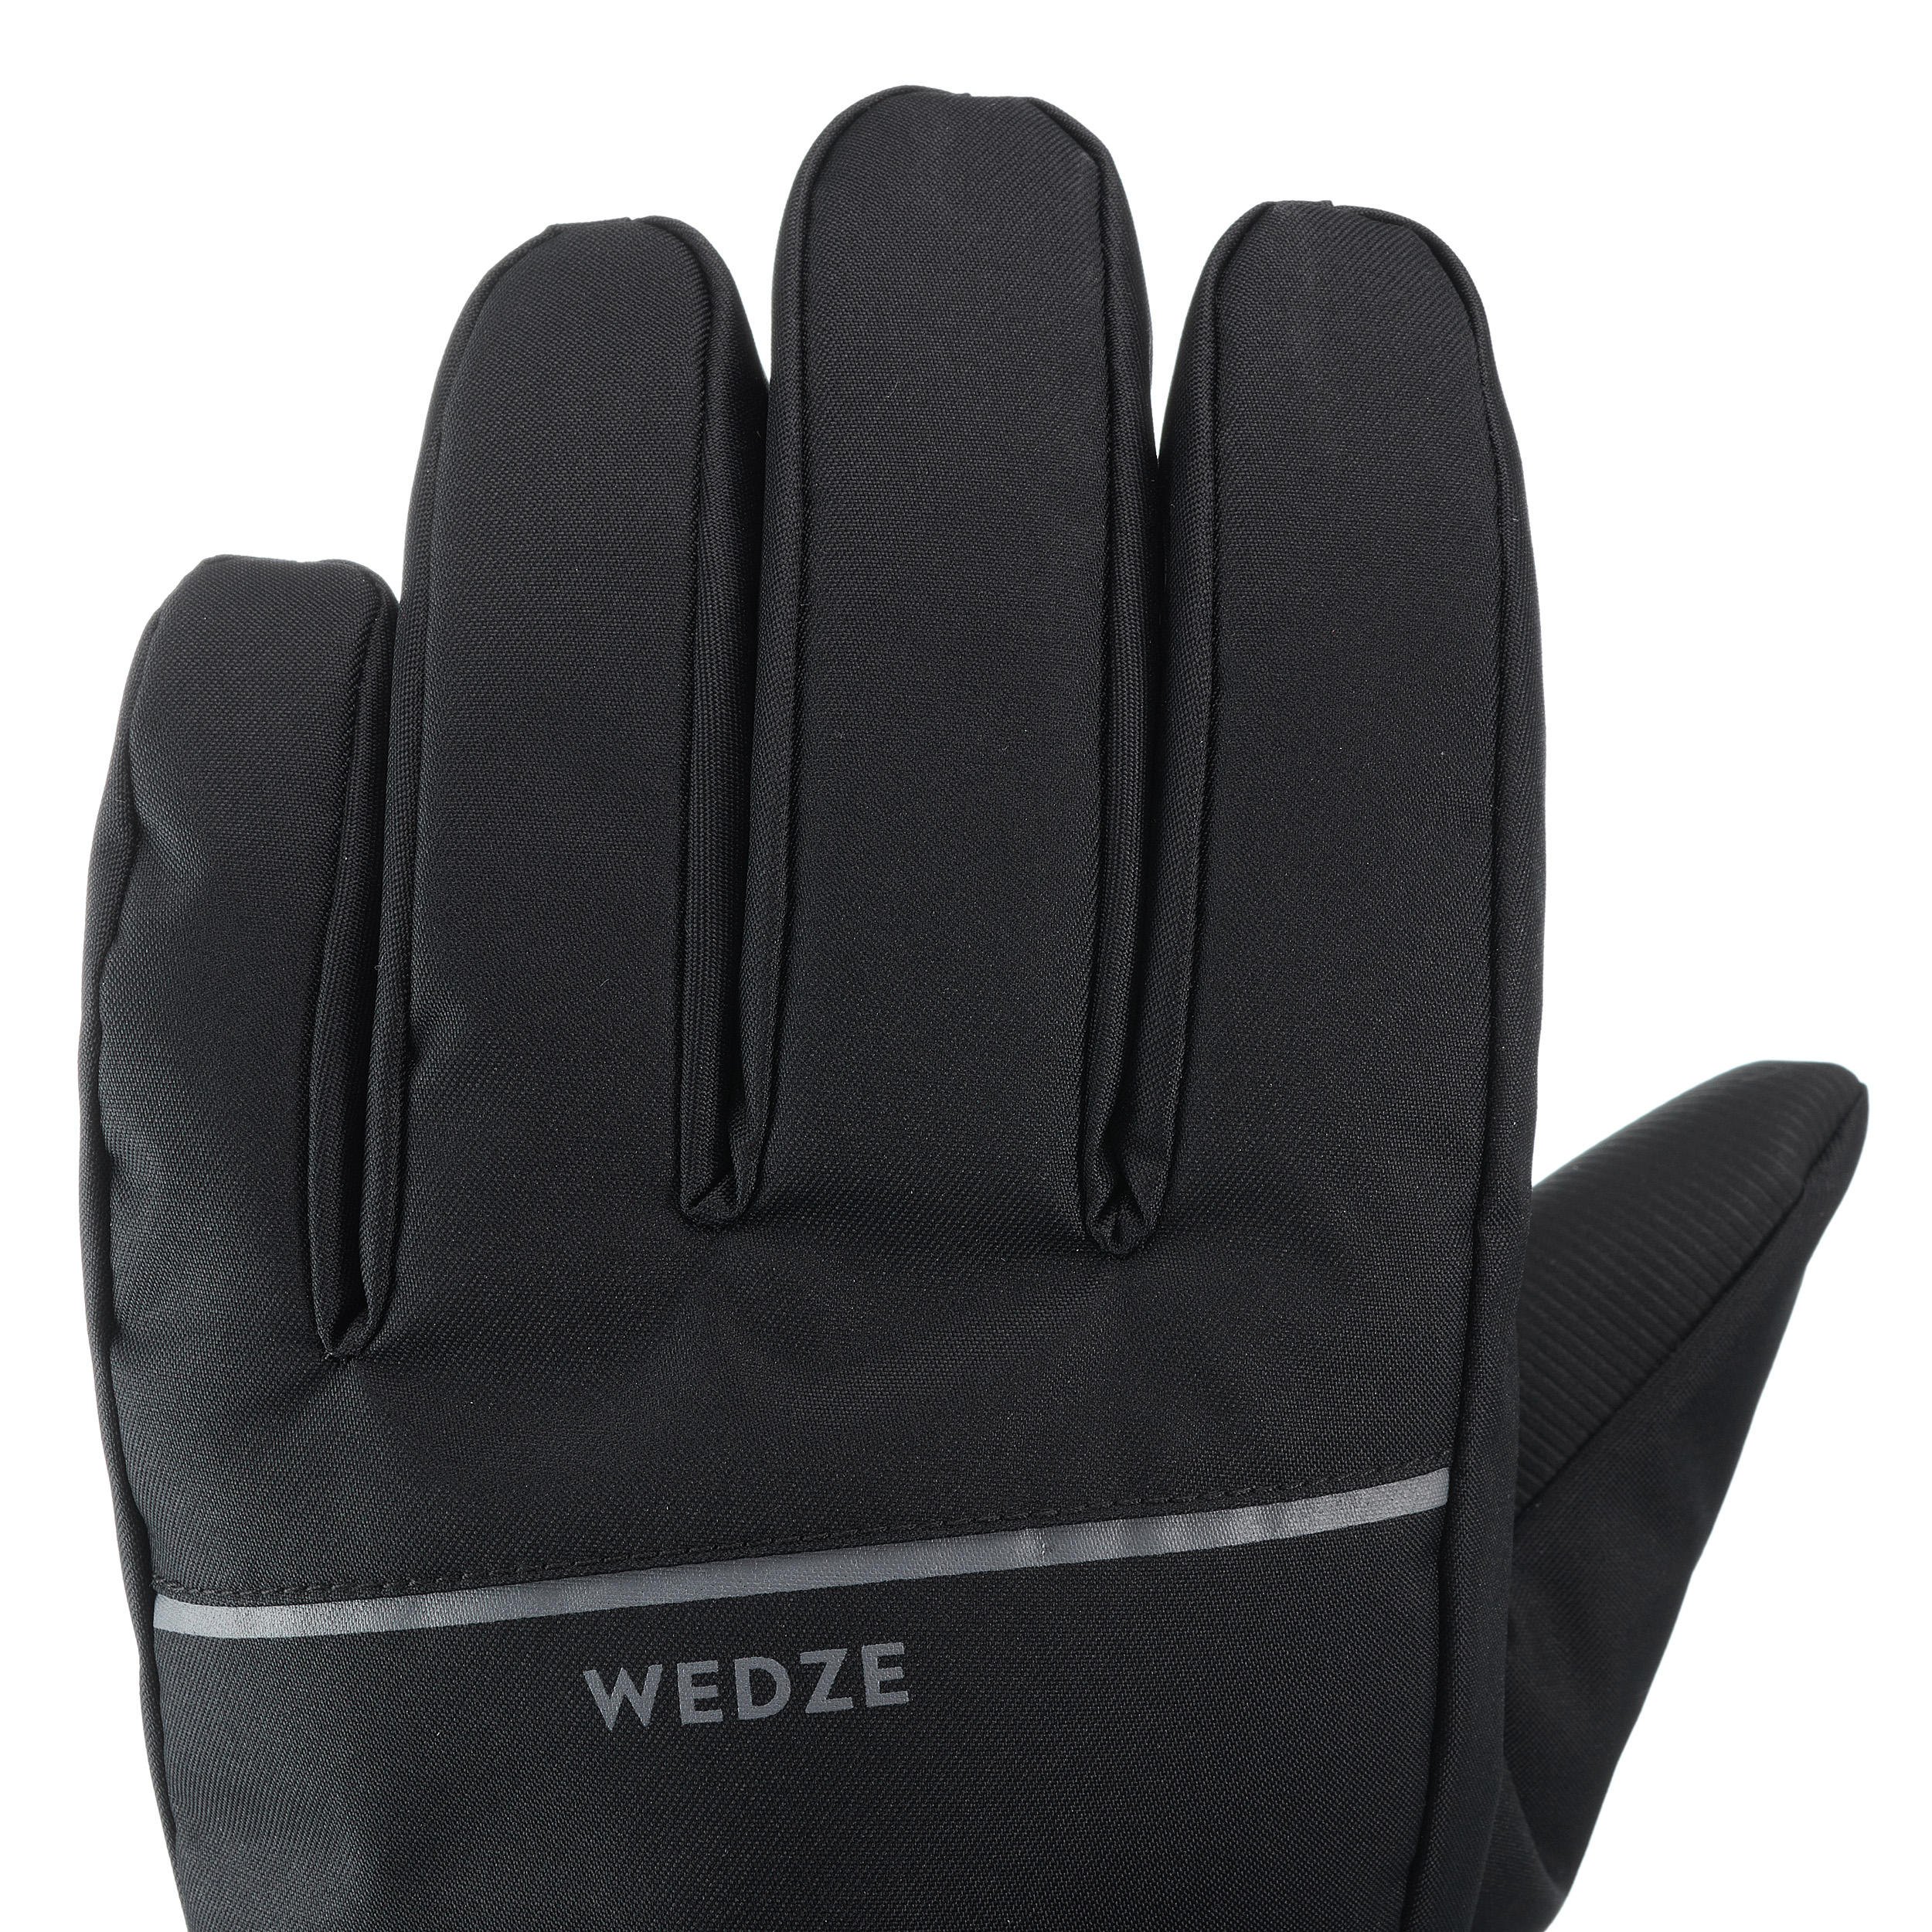 Warm Ski Gloves - Ski 100 Black - WEDZE